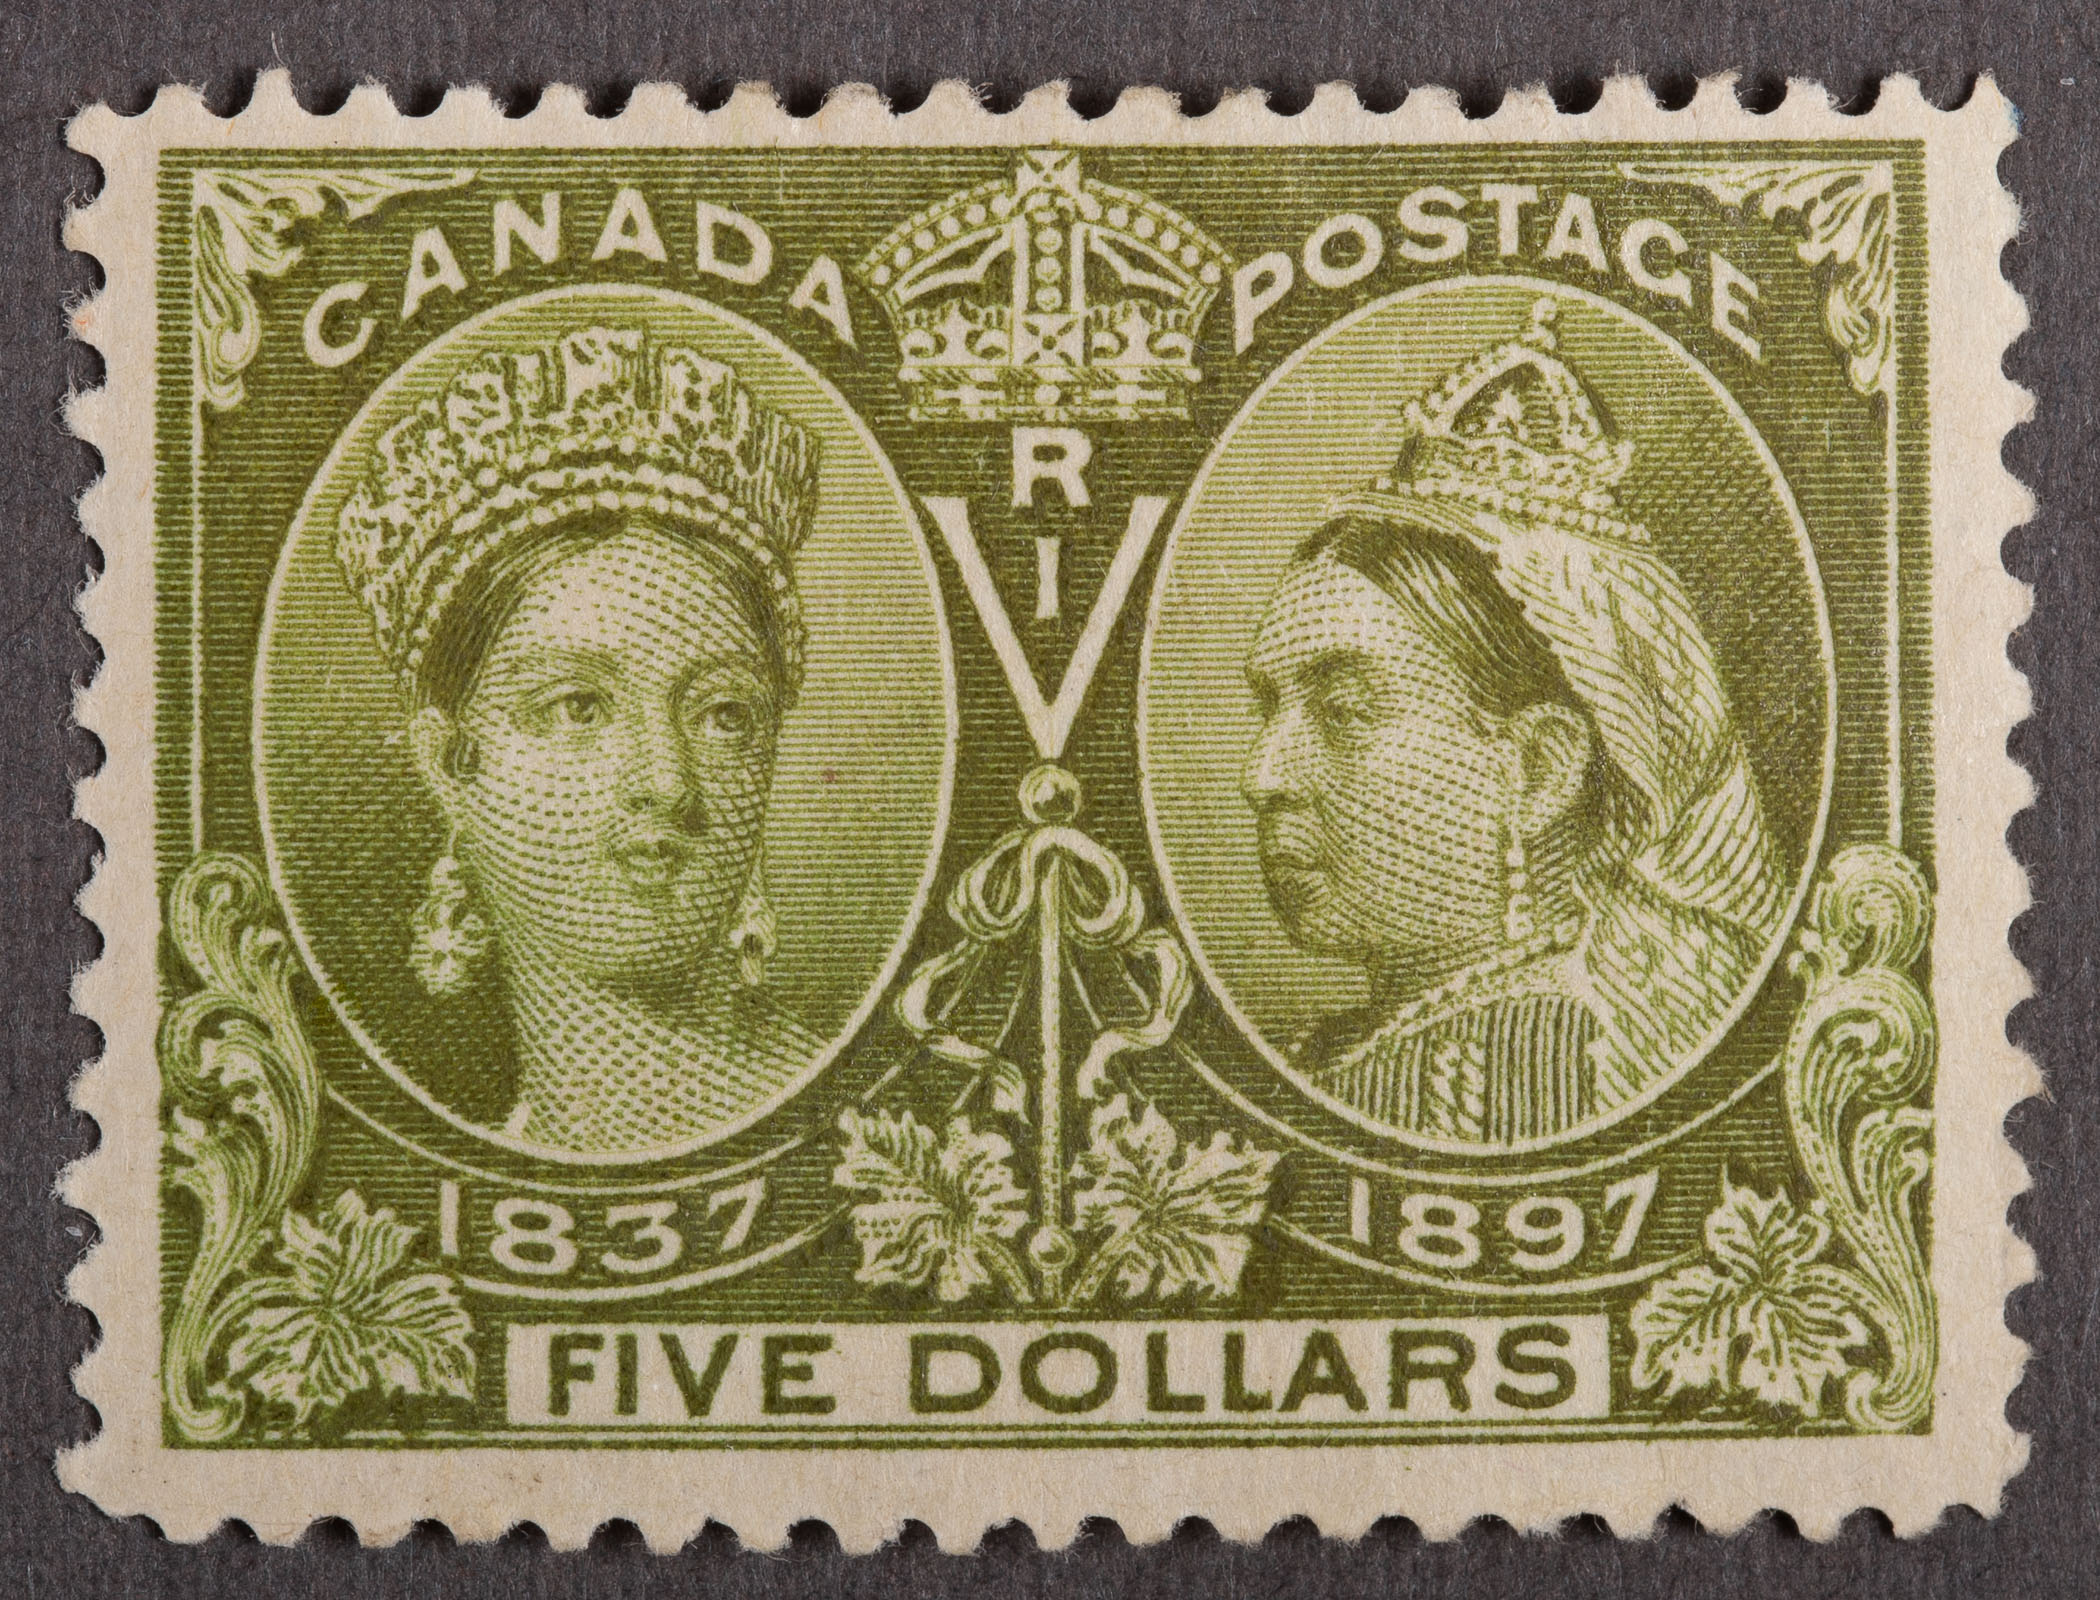 CANADA $5. POSTAGE STAMP, 1897 (Scott